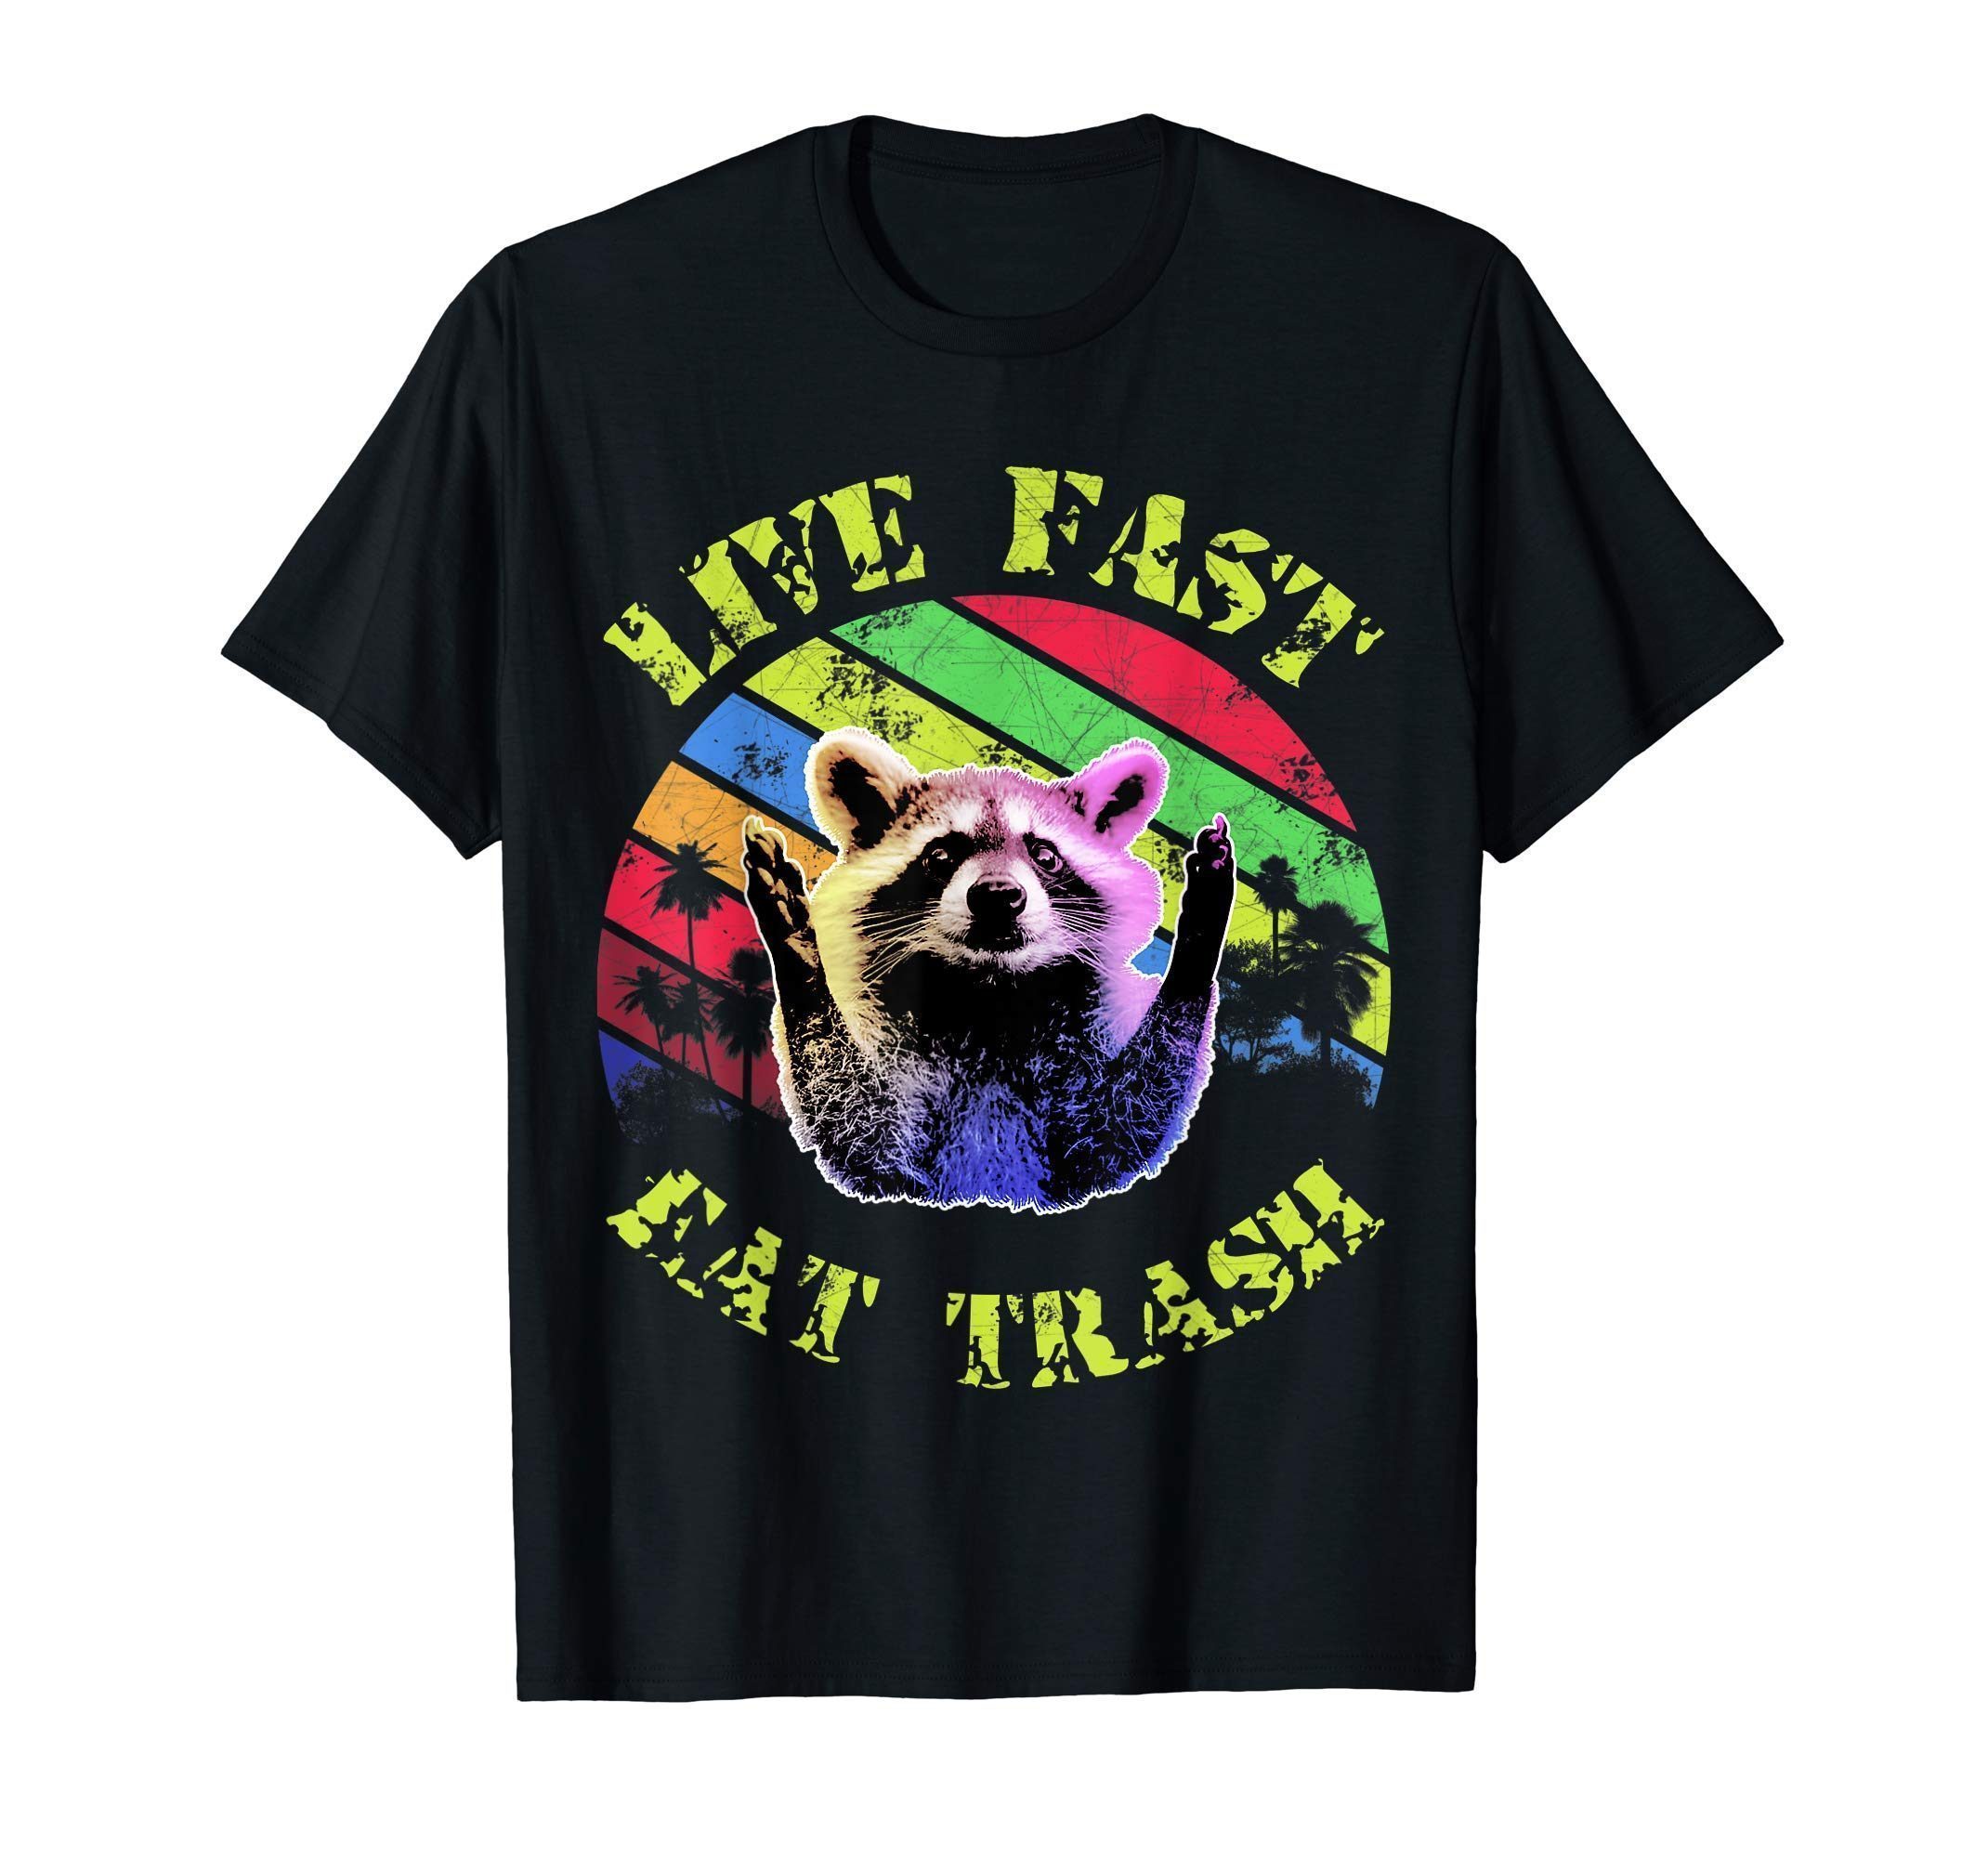 Live fast eat Trash Funny Raccoon Camping Vintage tee shirt ...